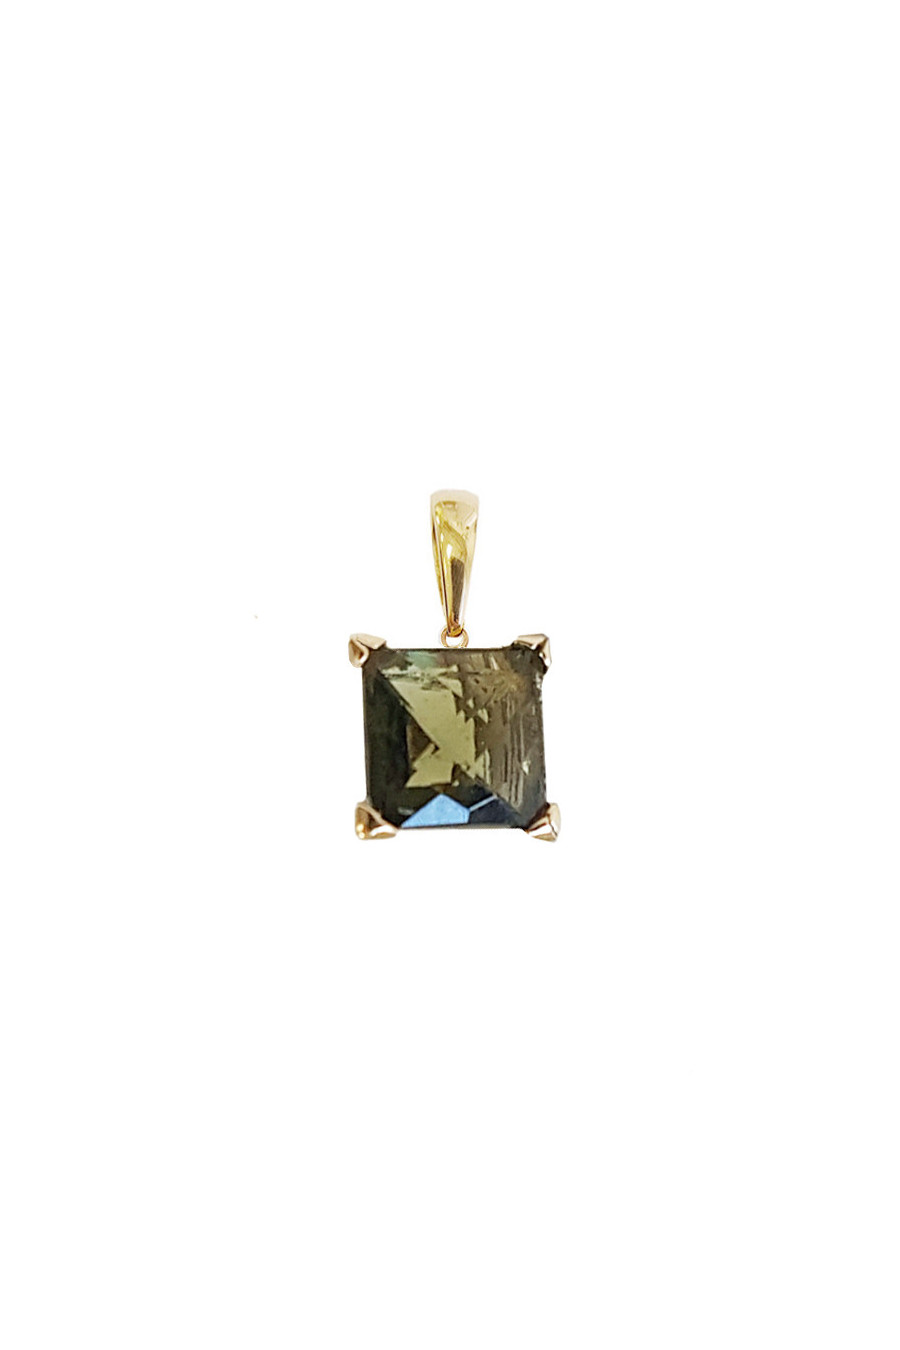 Gold pendant, moldavite